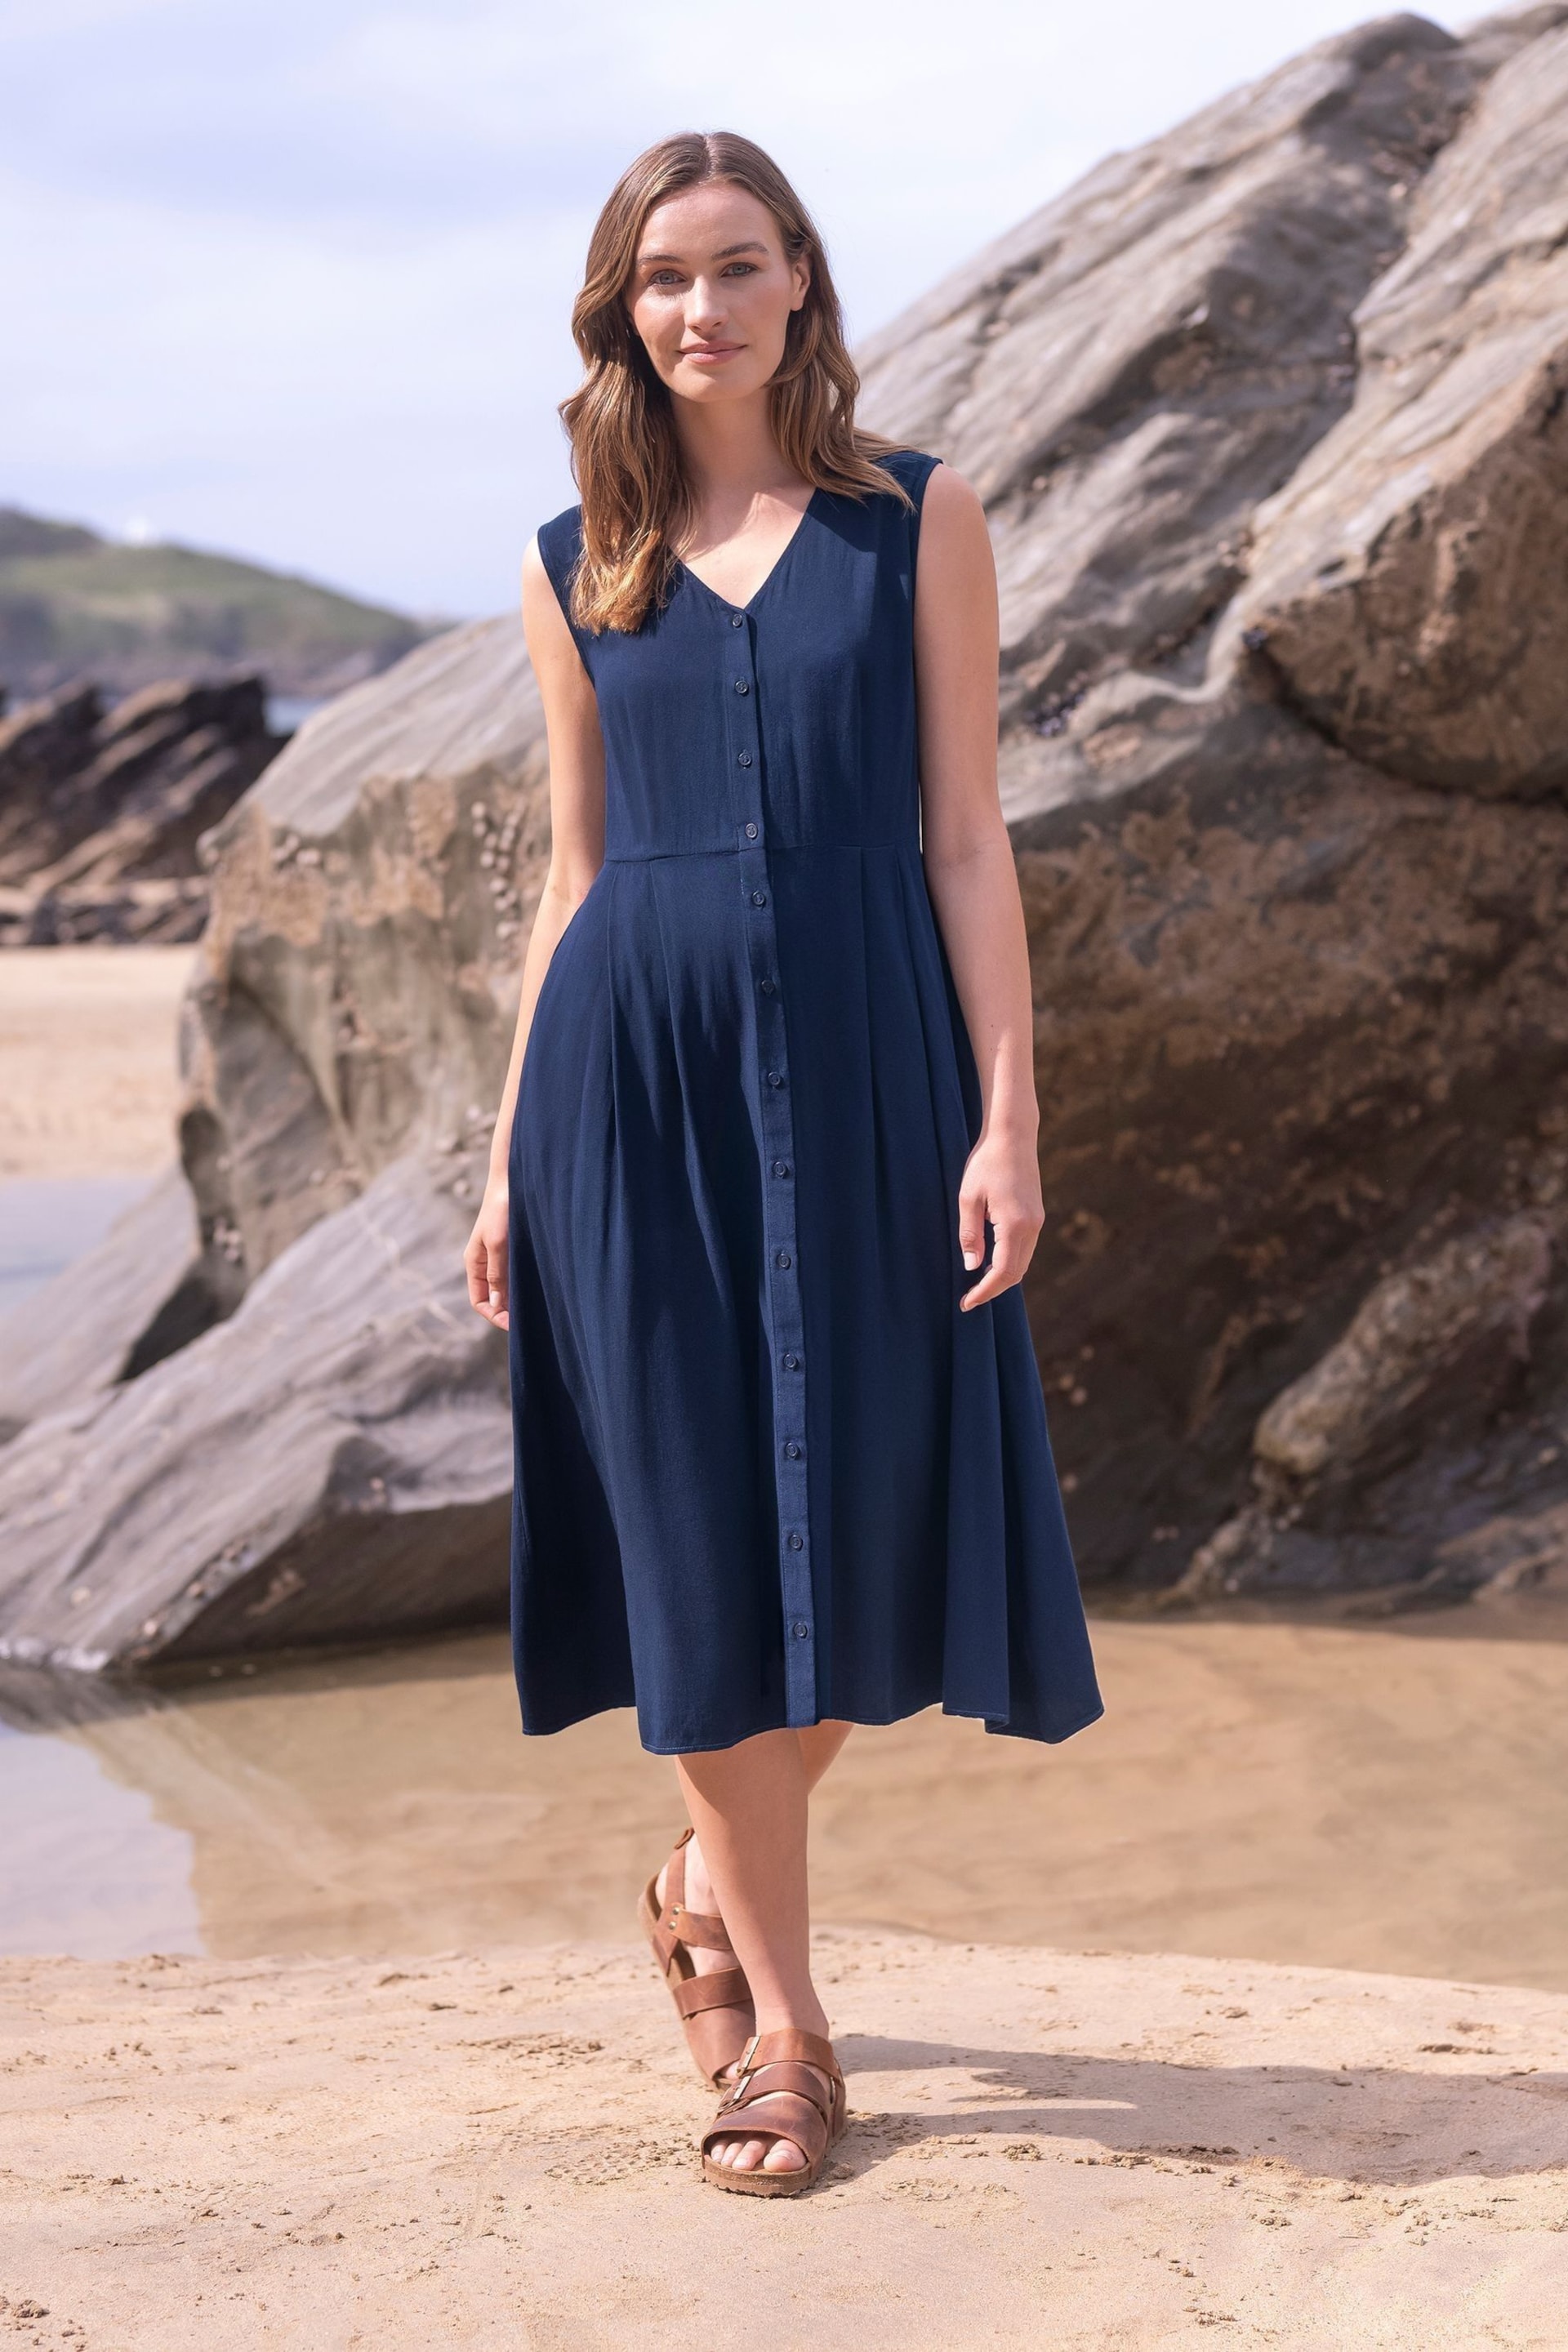 Celtic & Co. Blue Sleeveless Button Through Midi Dress - Image 1 of 2